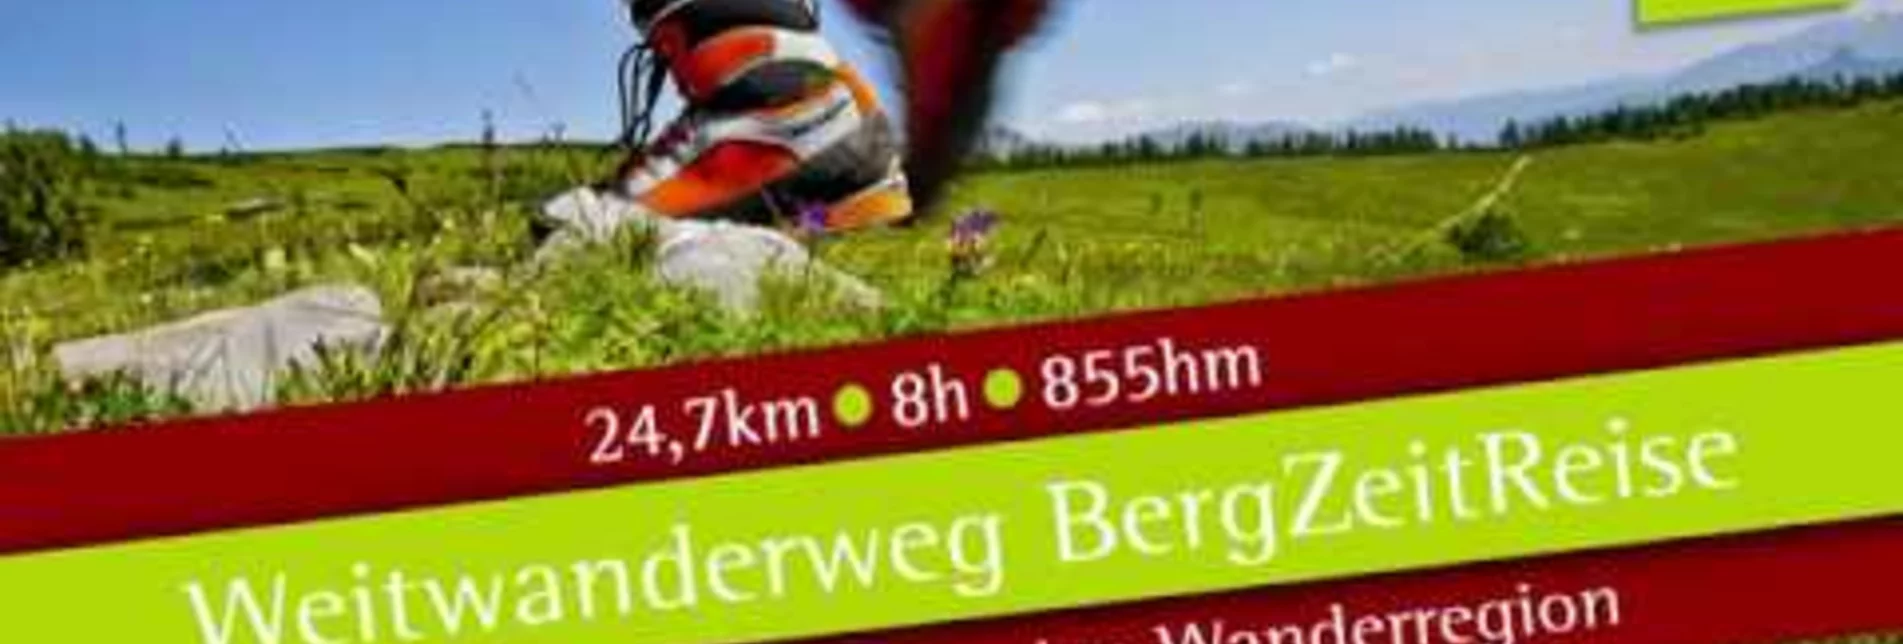 Long-Distance Hiking Etappe 12: BergZeitReise Kindberg - Pogusch - Kapfenberg - Touren-Impression #1 | © Erlebnisregion Hochsteiermark